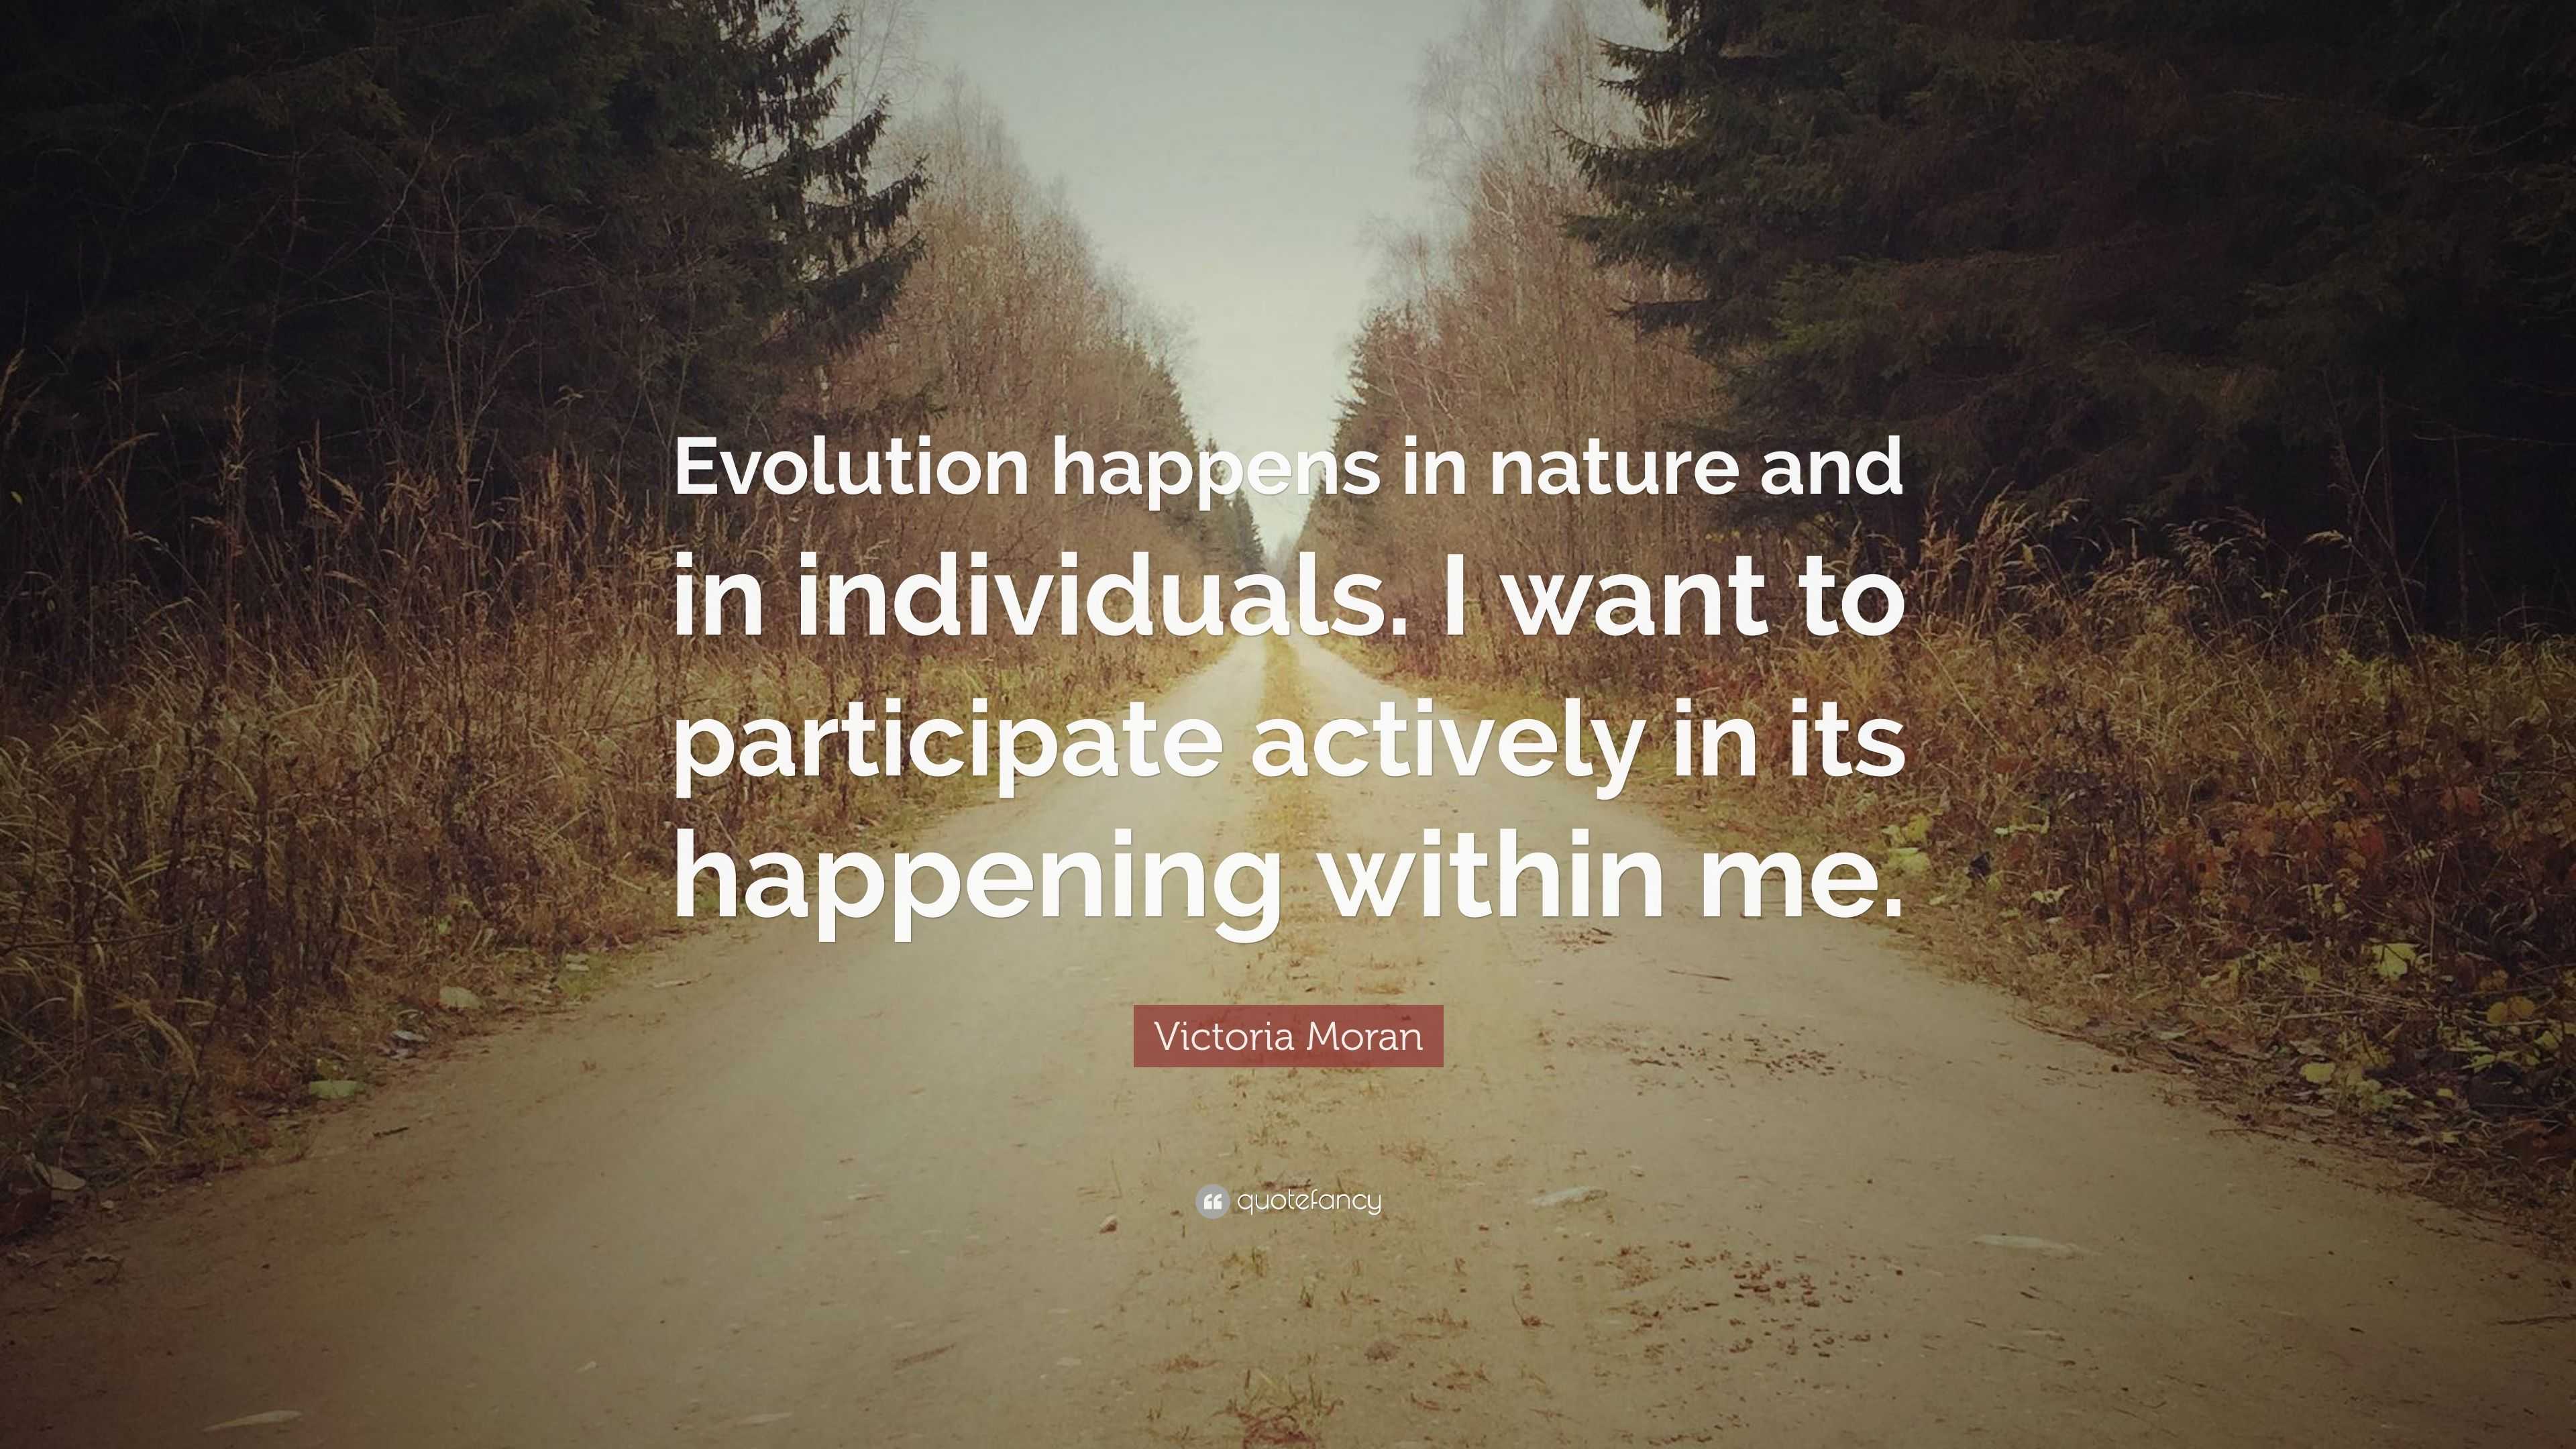 Victoria Moran Quote: “Evolution happens in nature and in individuals ...